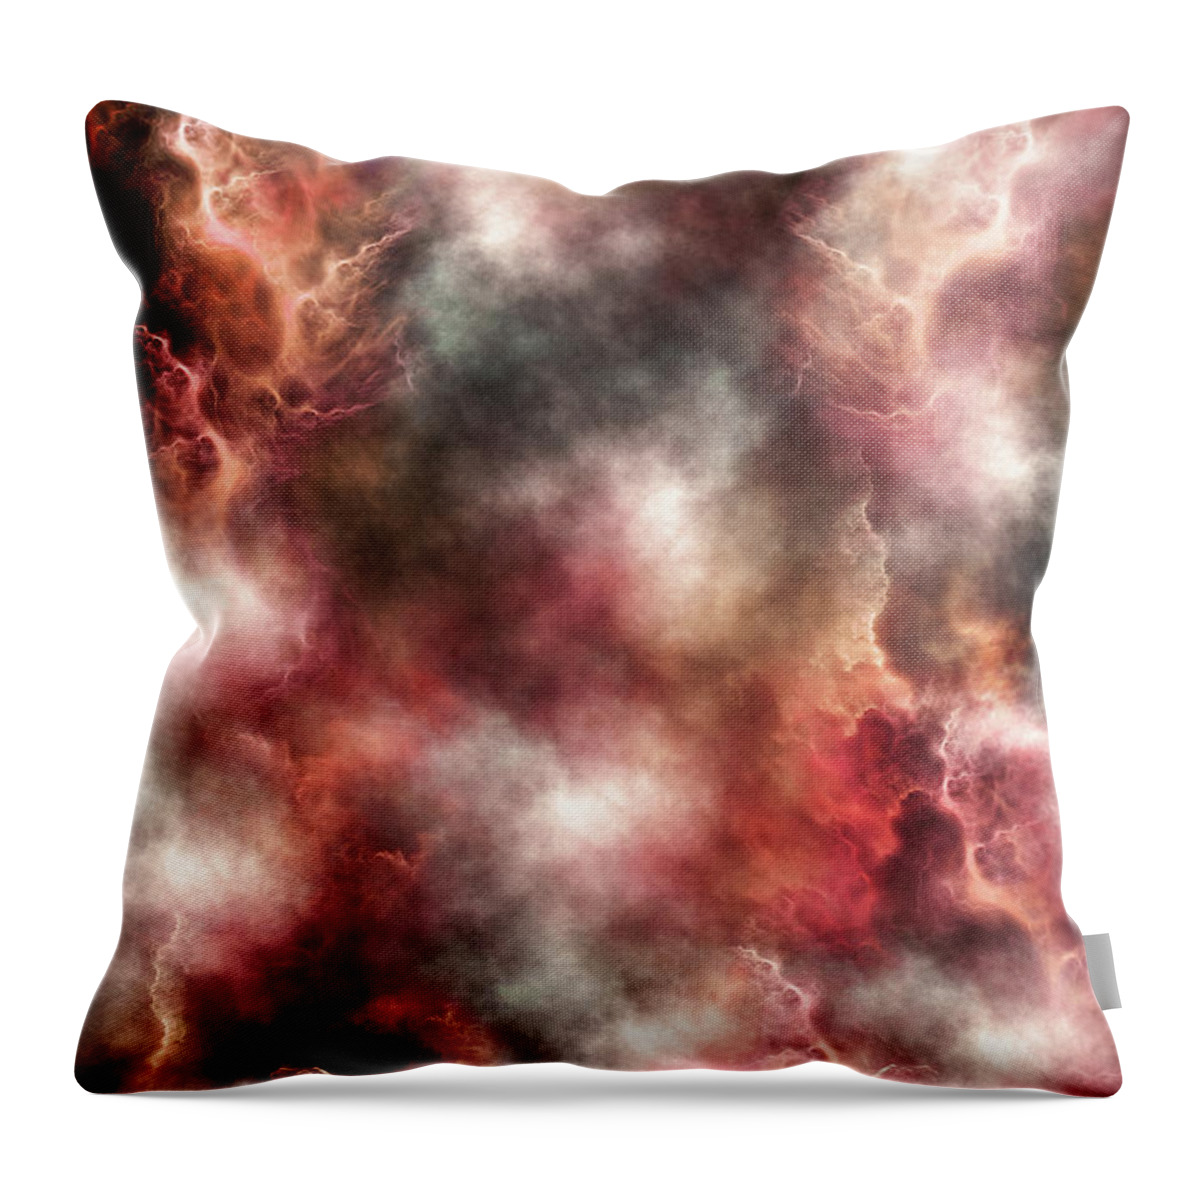 Nebula Throw Pillow featuring the digital art Anomalous Nebula by Rolando Burbon